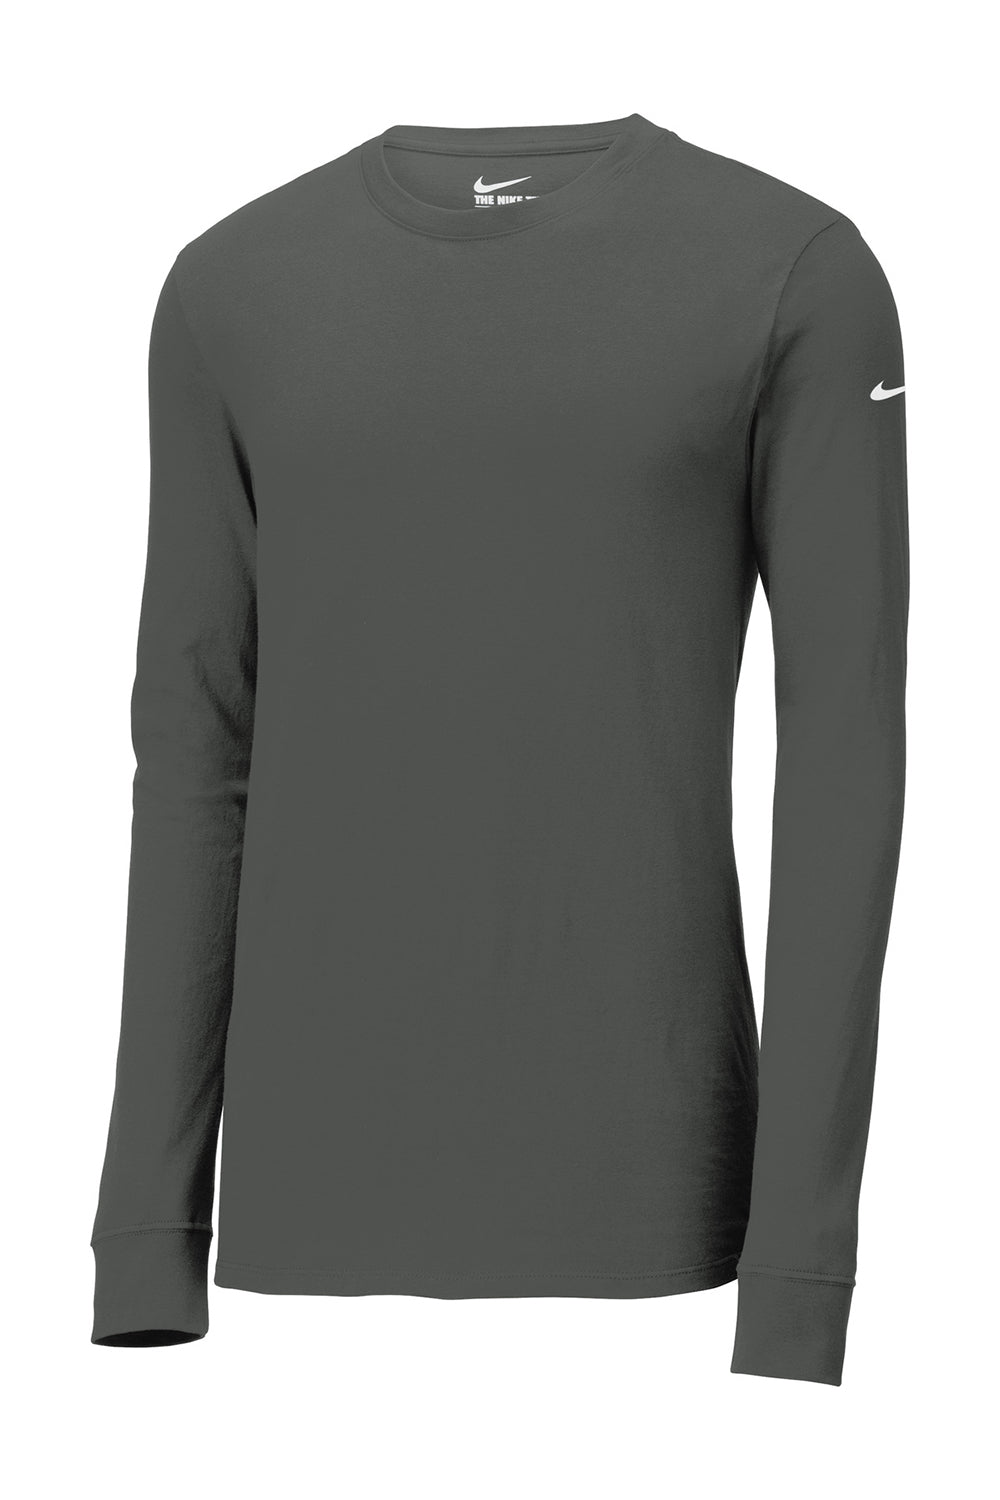 Nike NKBQ5230 Mens Dri-Fit Moisture Wicking Long Sleeve Crewneck T-Shirt Anthracite Grey Flat Front